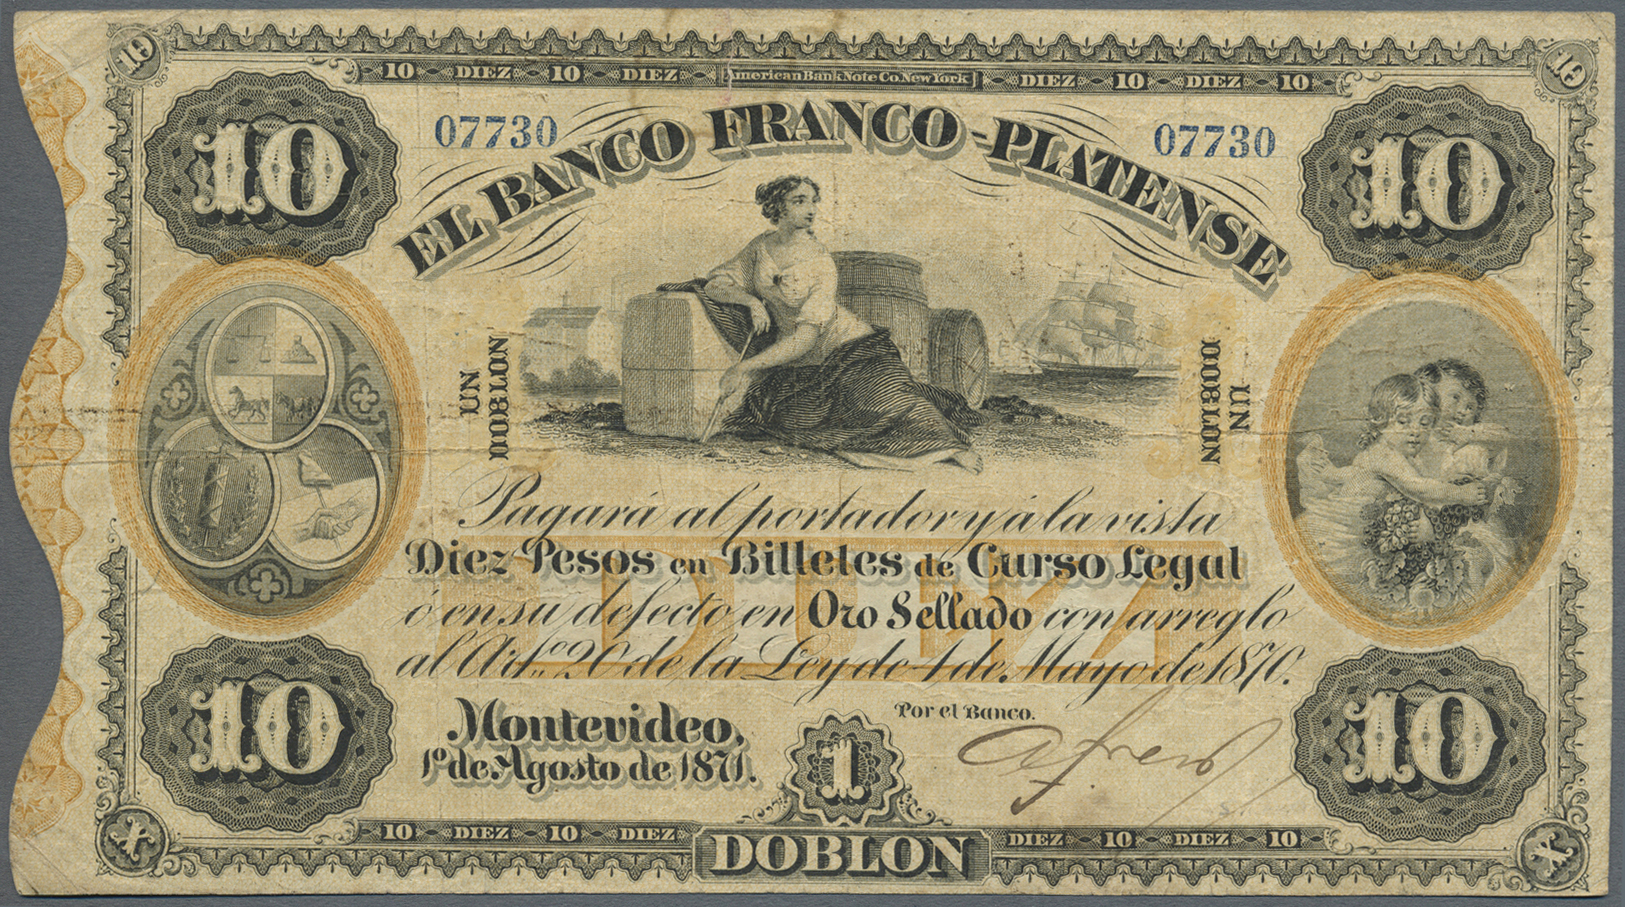 03480 Uruguay: El Banco Franco-Platense 1 Doblon = 10 Pesos 1871 P. S172, Used With Folds, No Holes, One 1cm Tear At Upp - Uruguay